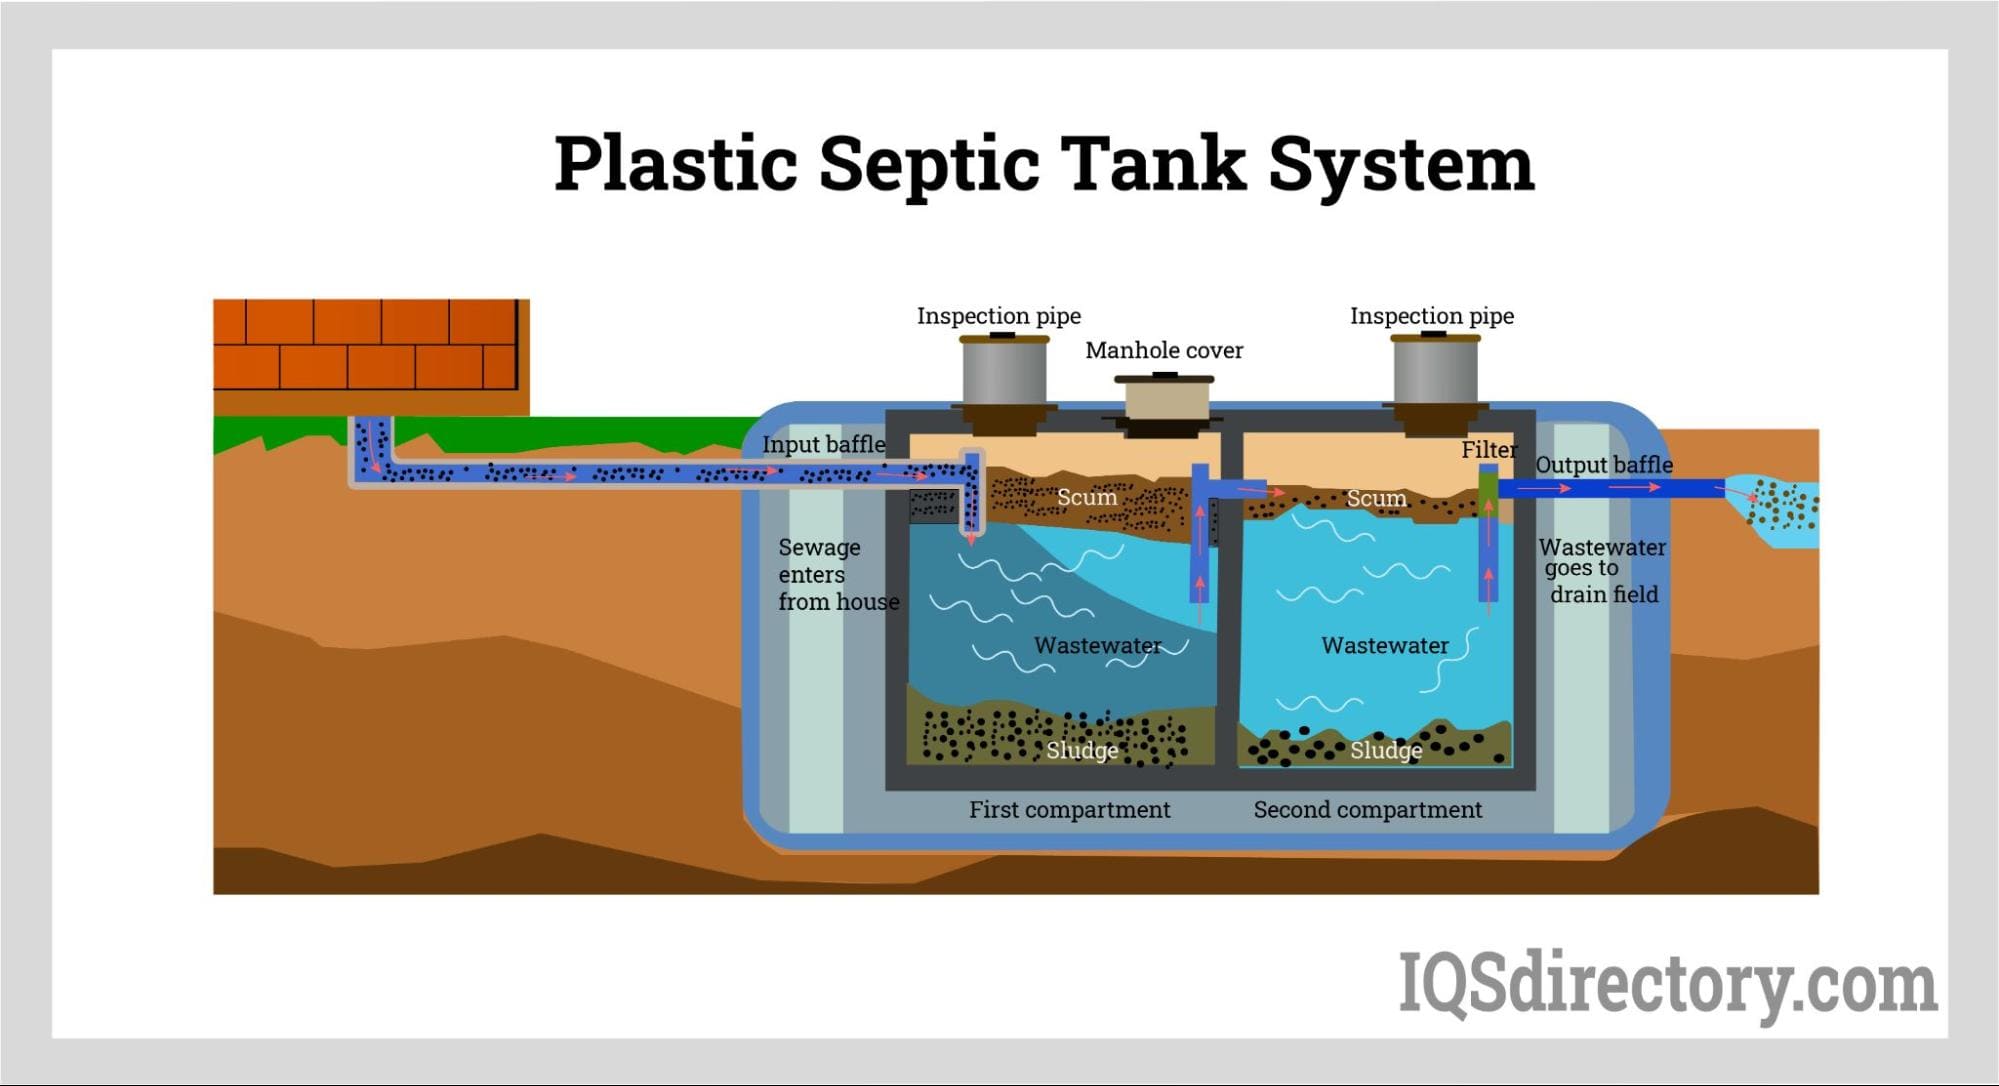 Plastic Septic Tank System